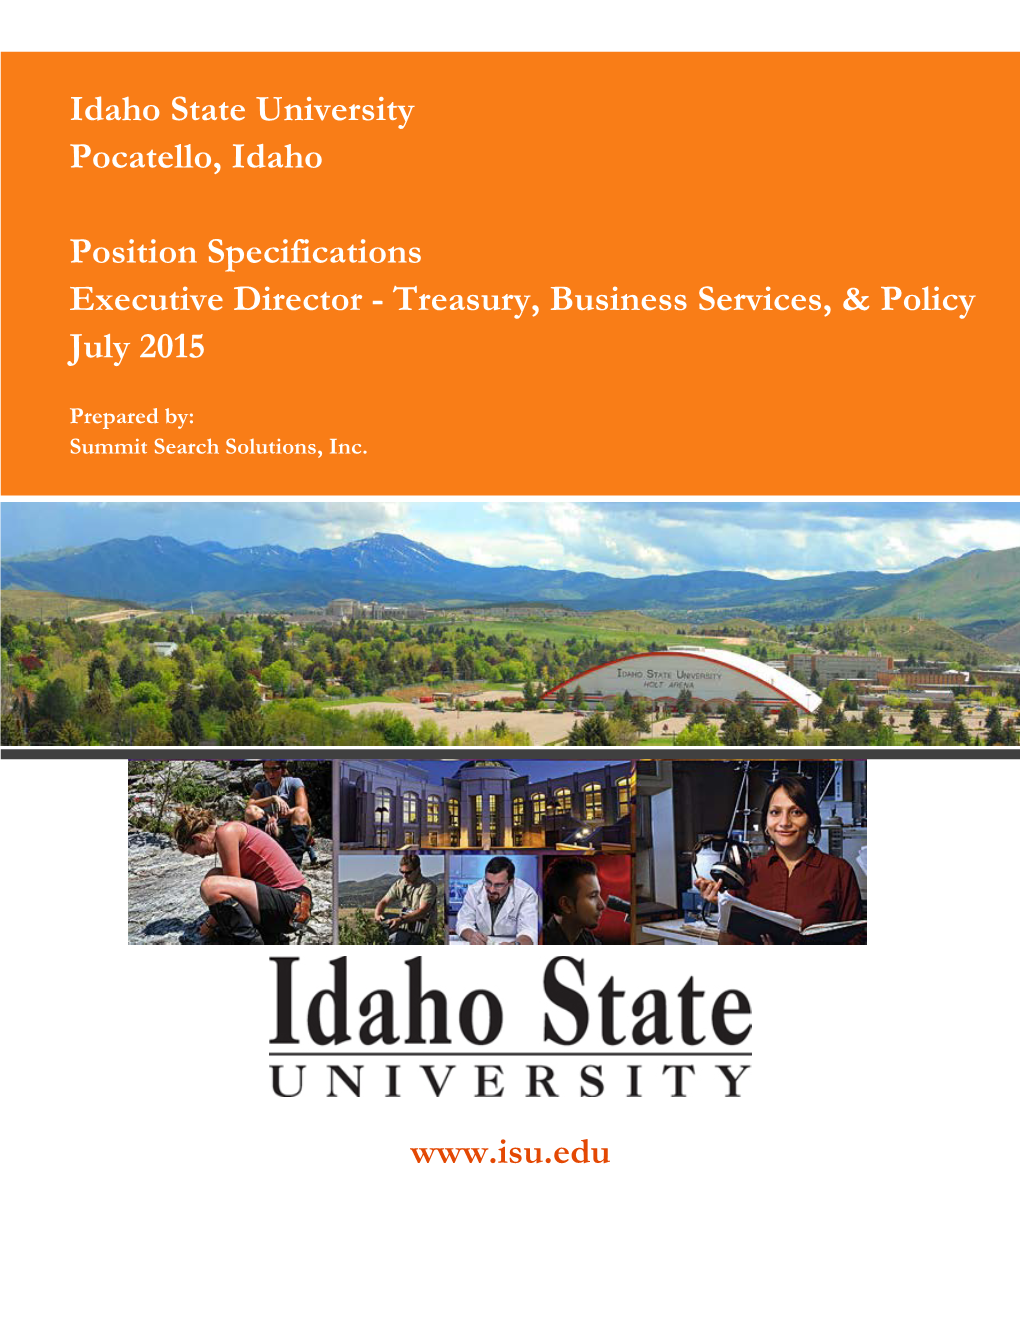 Idaho State University Pocatello, Idaho Position Specifications Executive Director